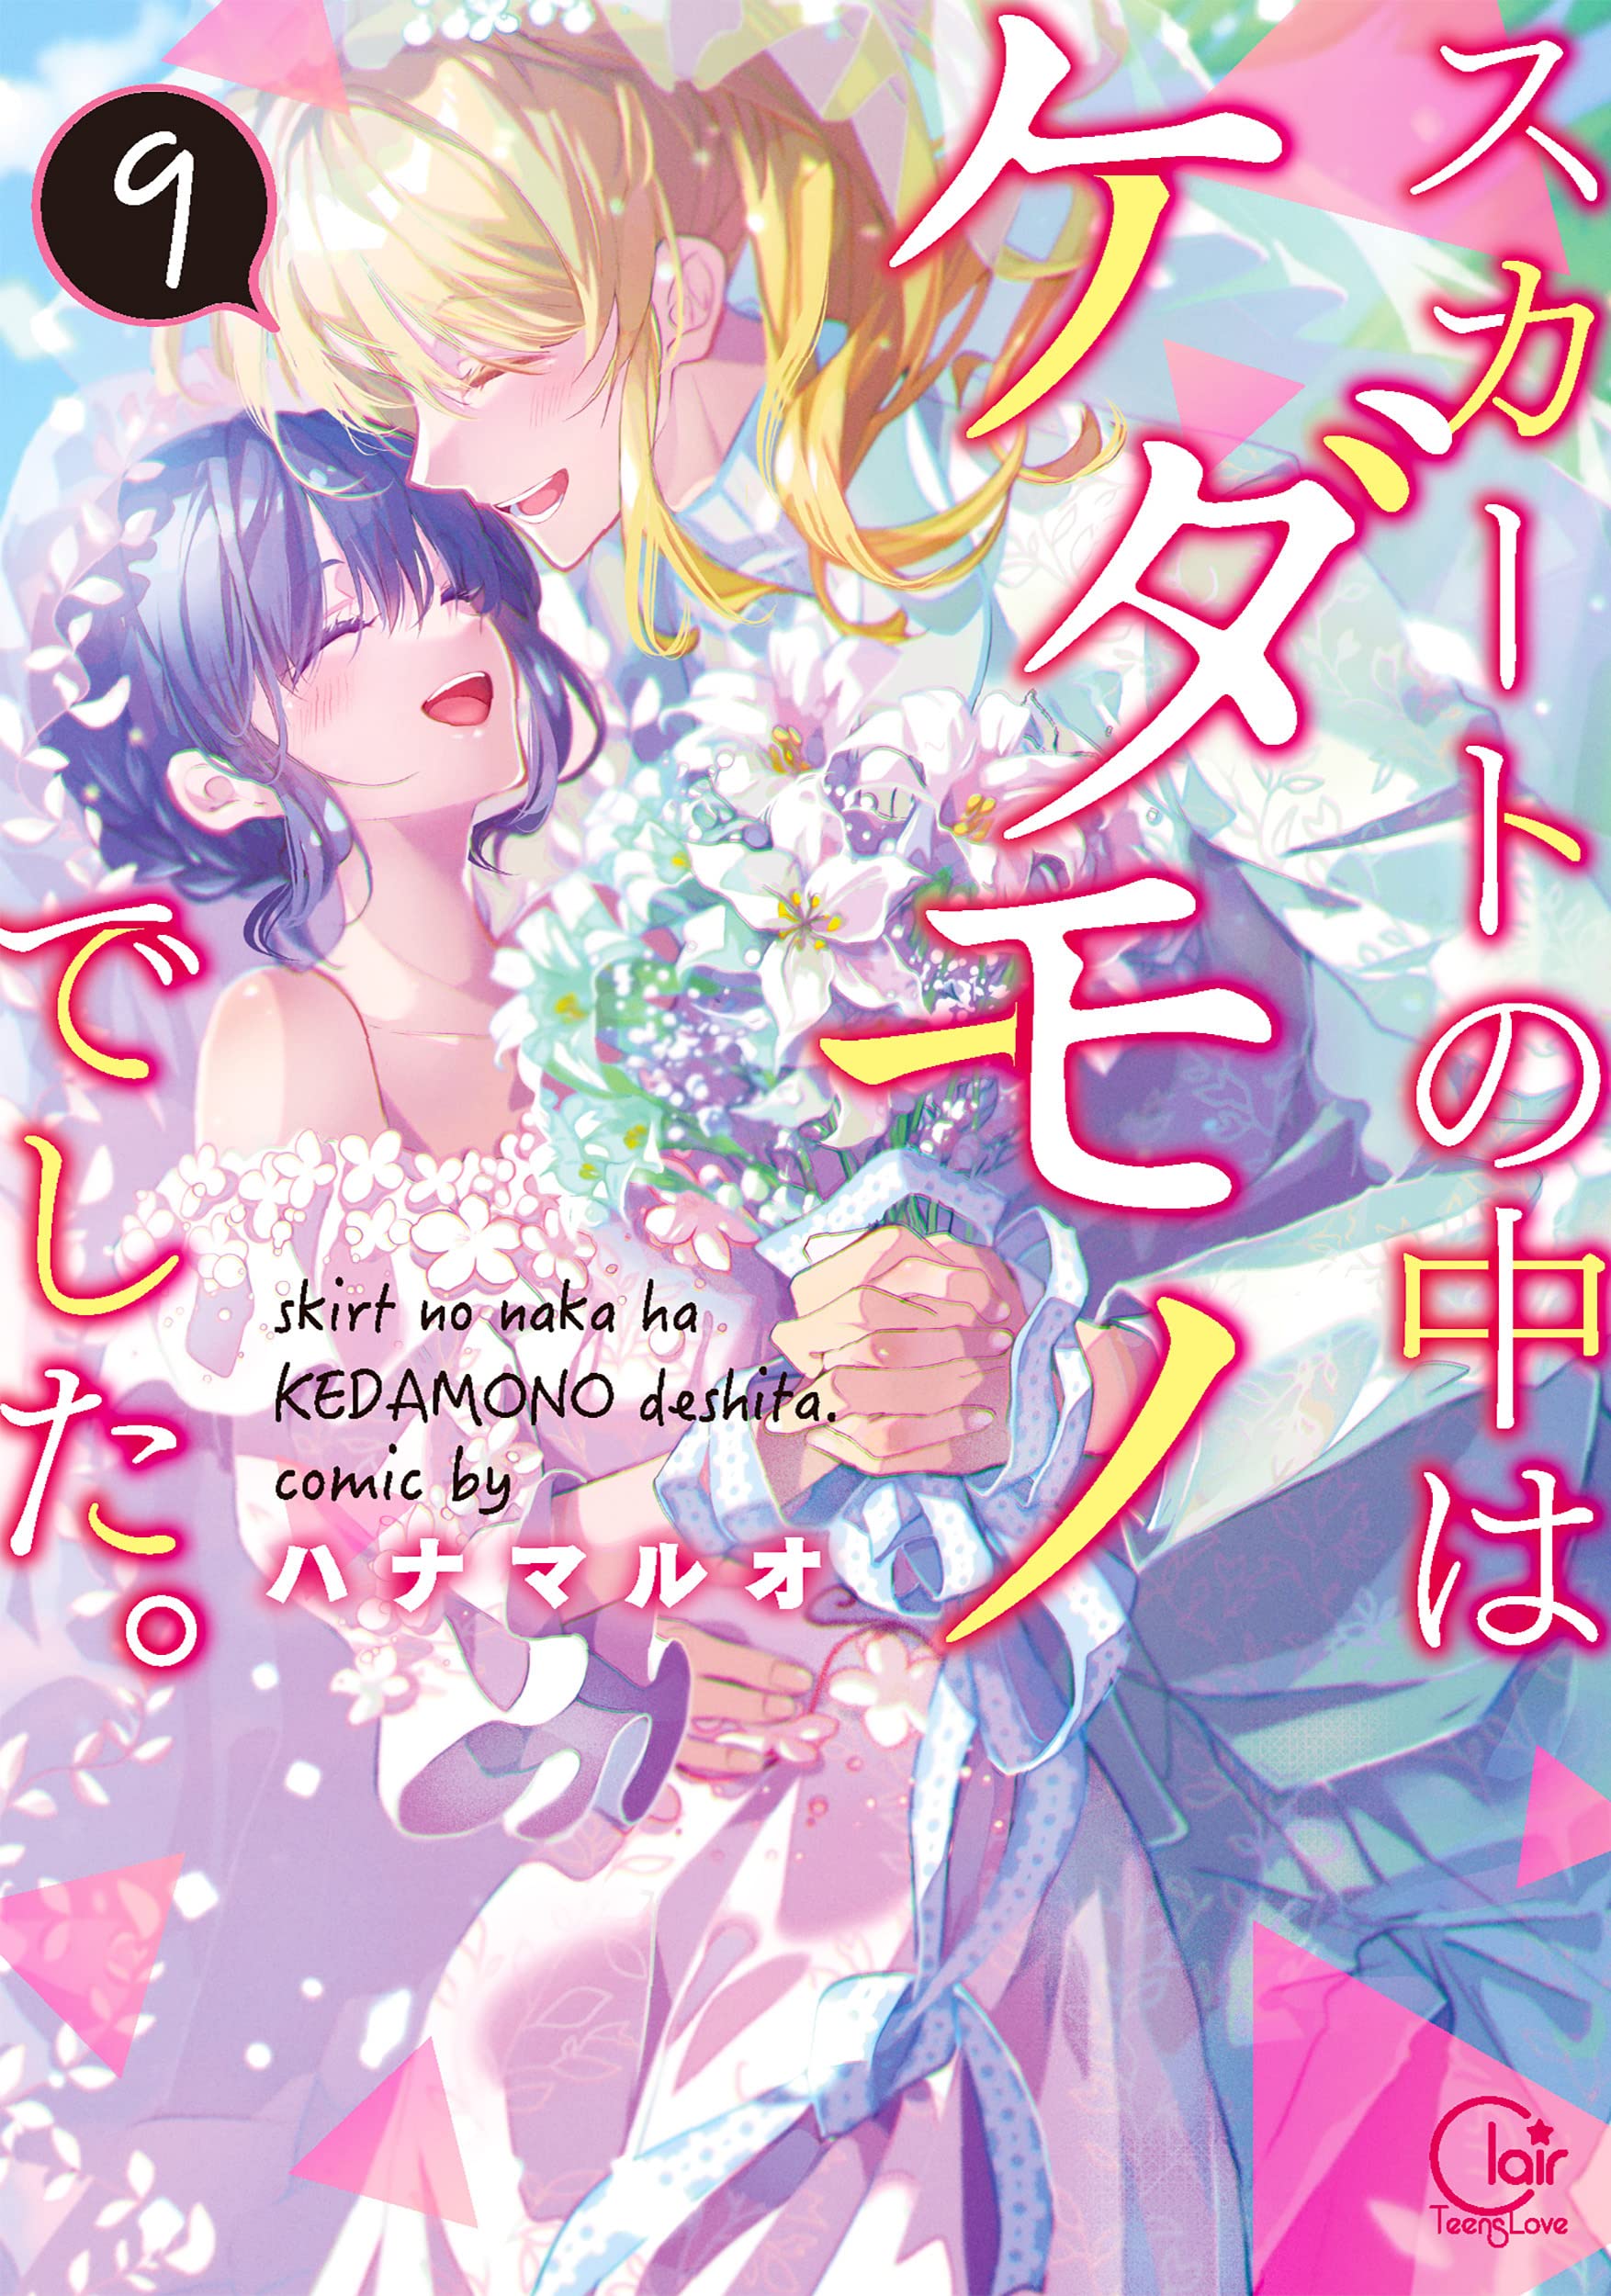 MyAnimeList on X: Manga Skirt no Naka wa Kedamono deshita